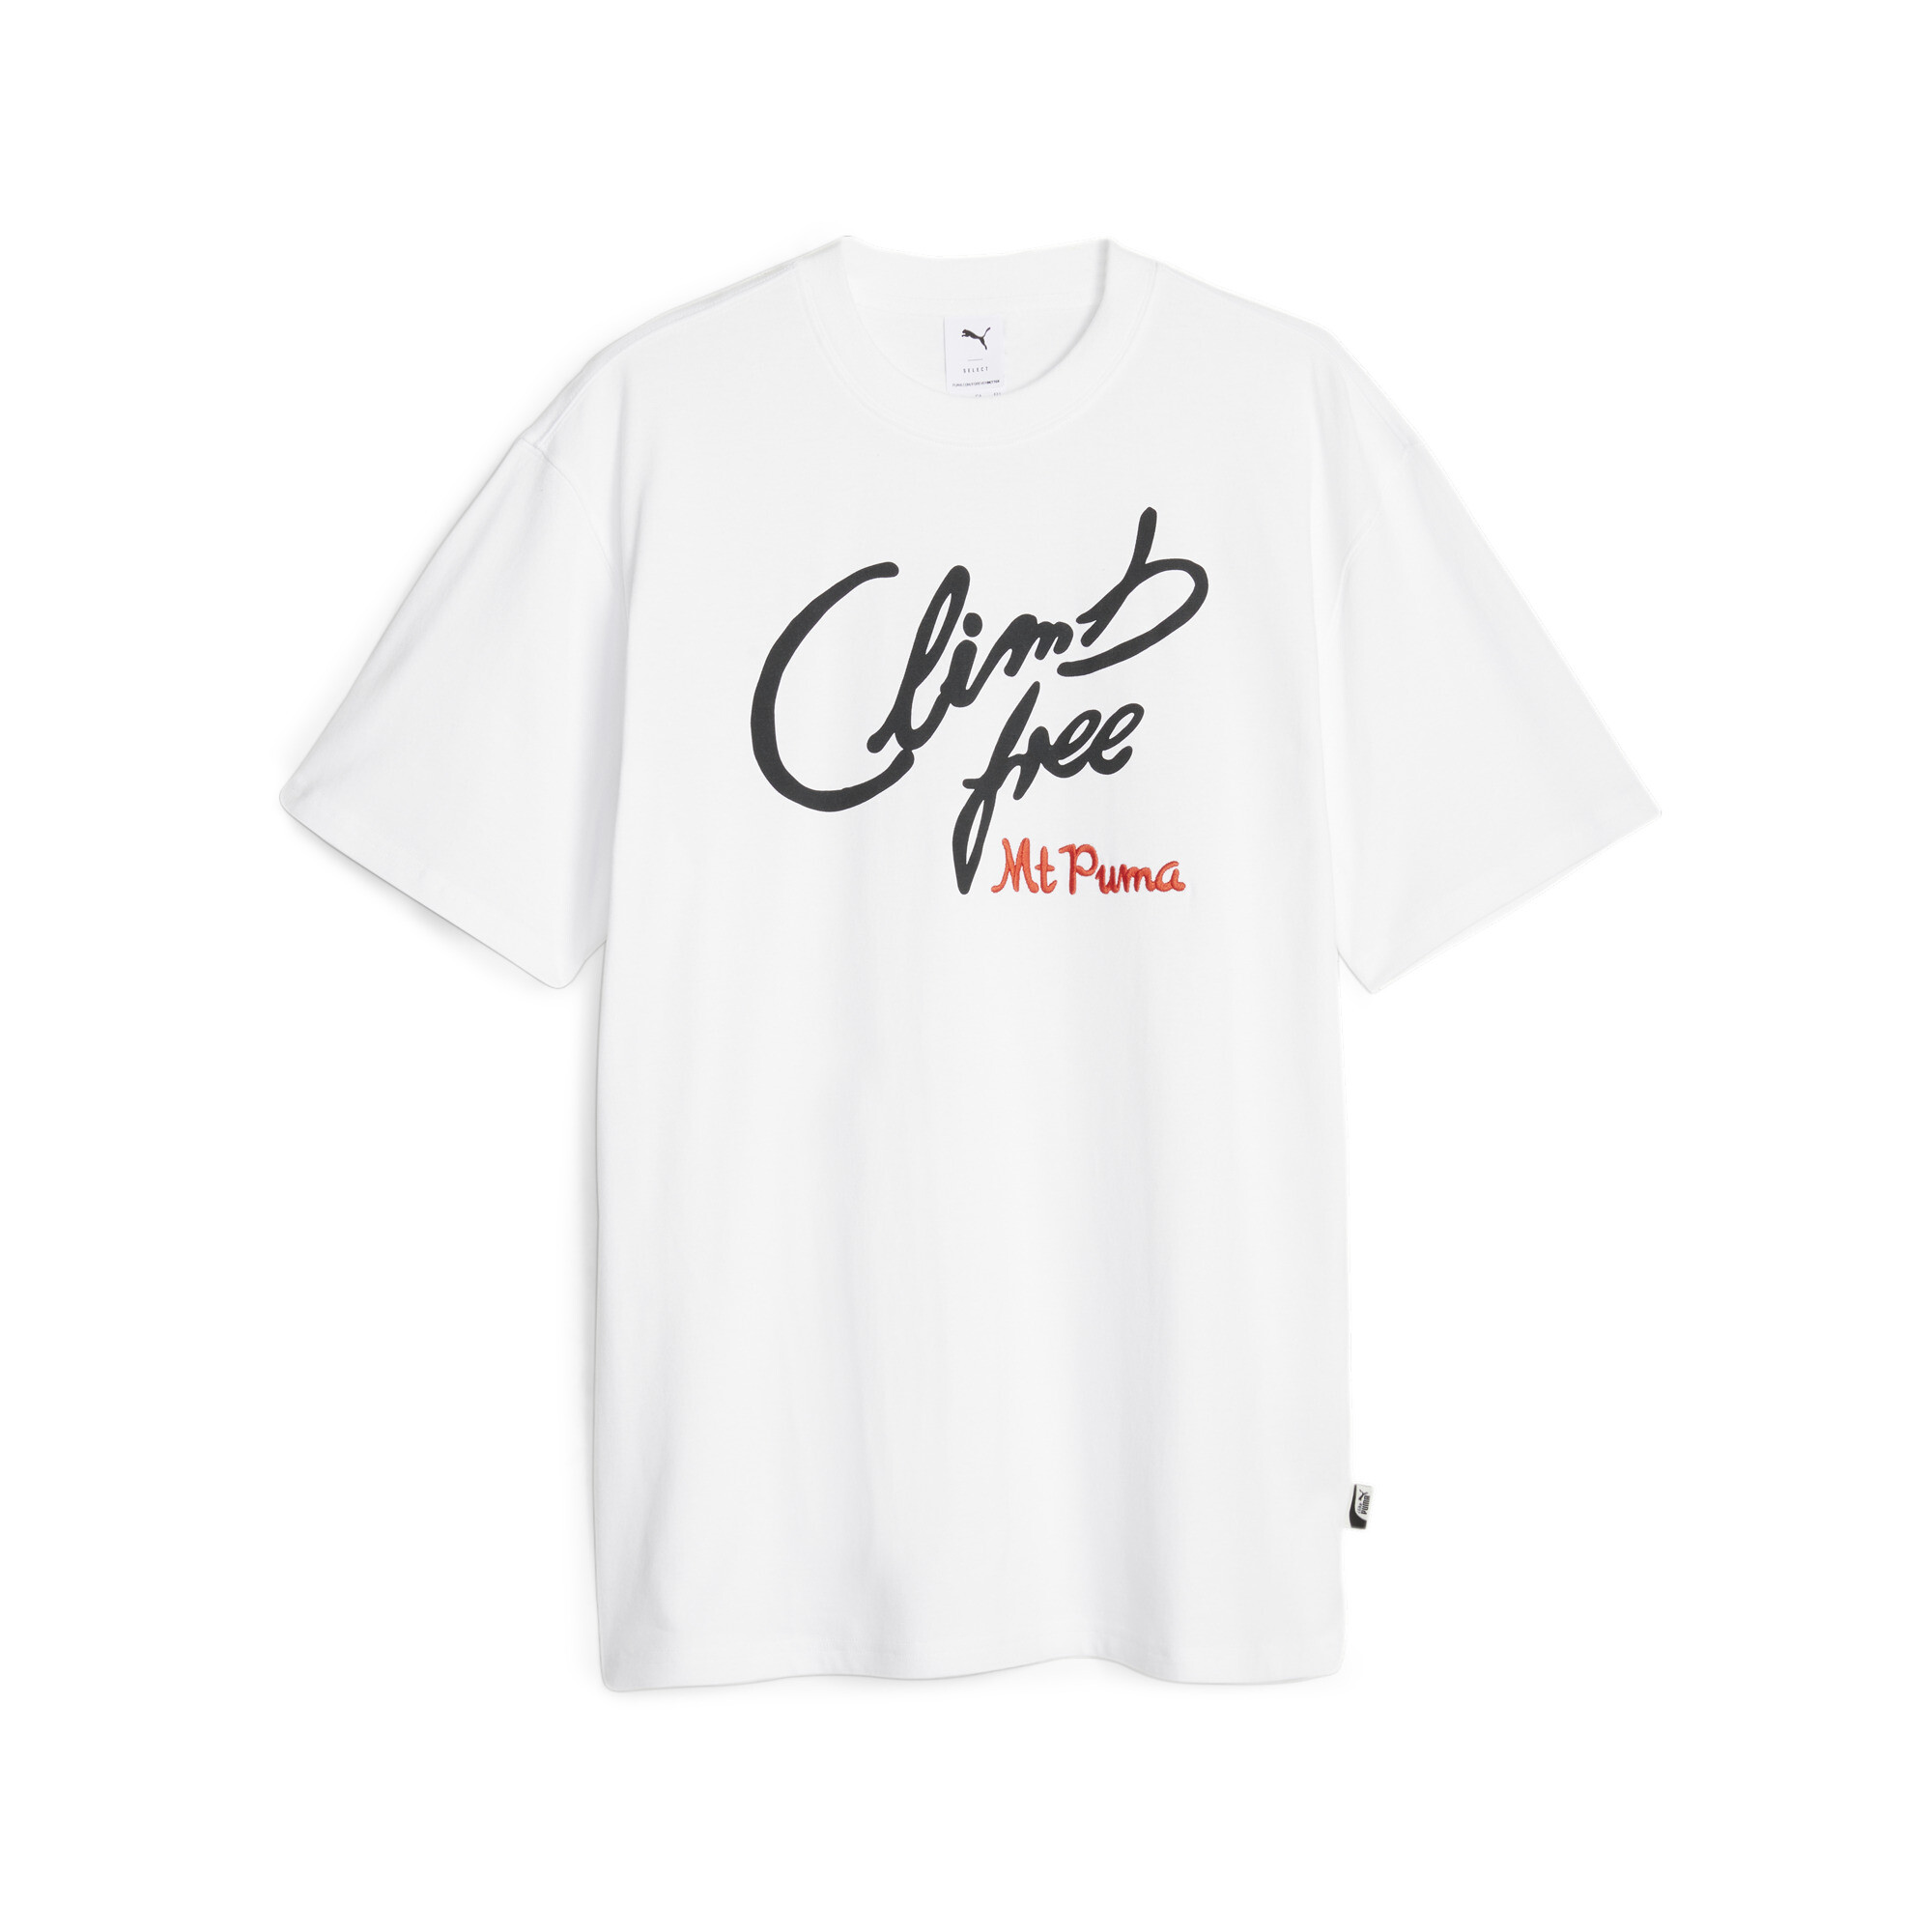 Men's PUMA The NeverWorn II T-Shirt In White, Size 2XL